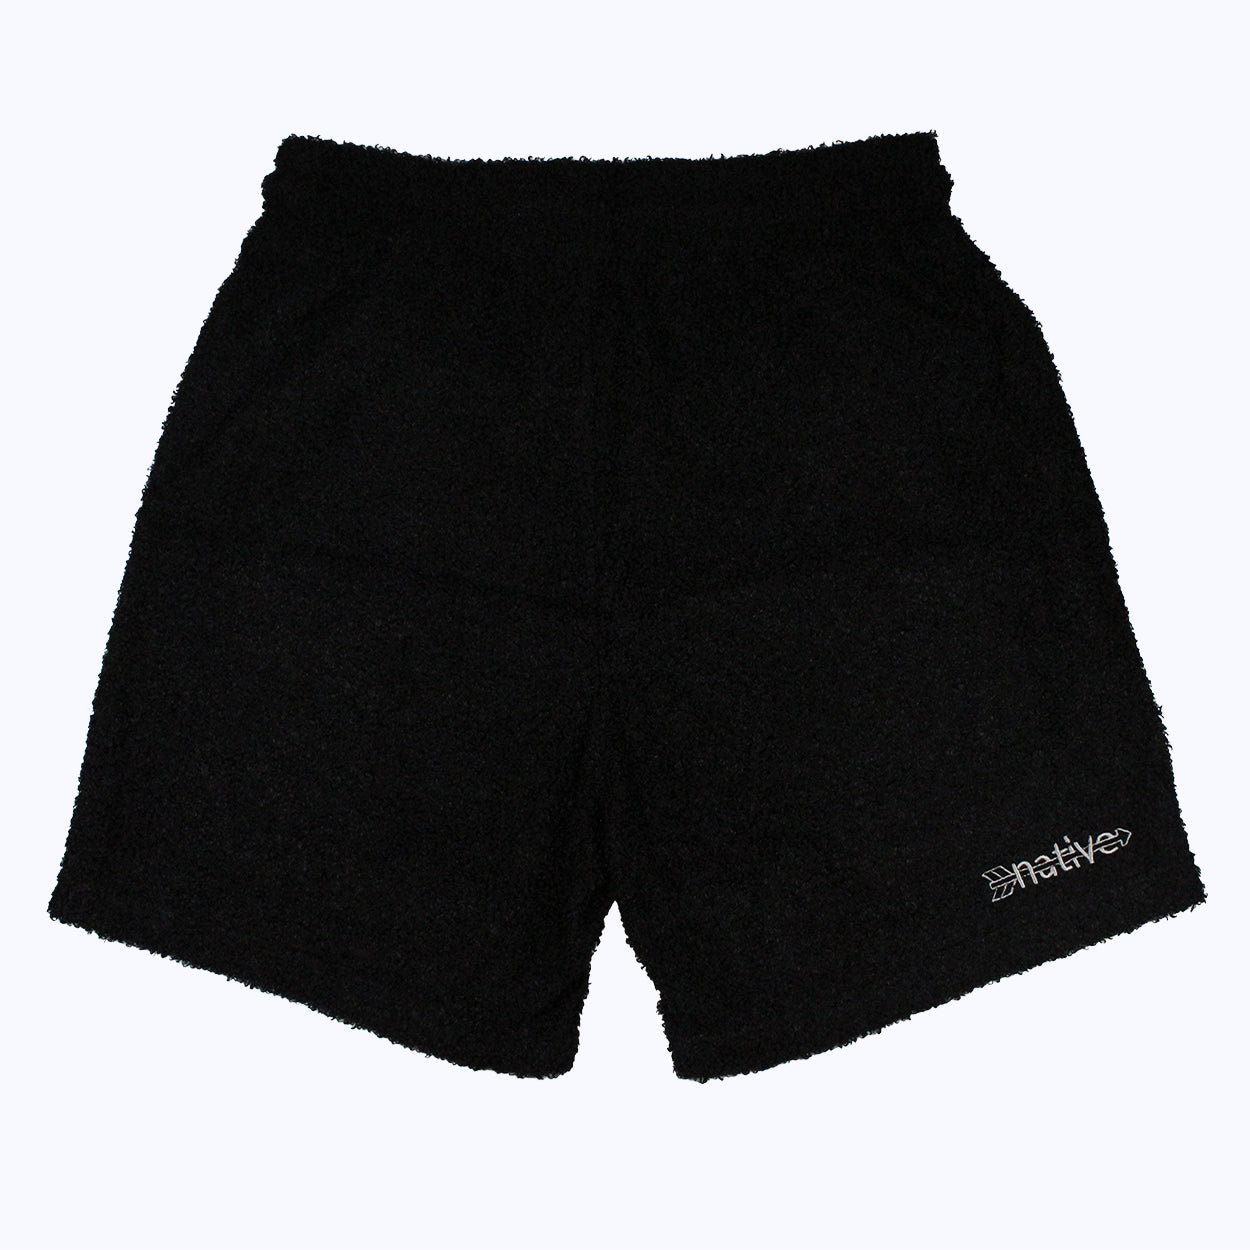 sherpa shorts in black/silver